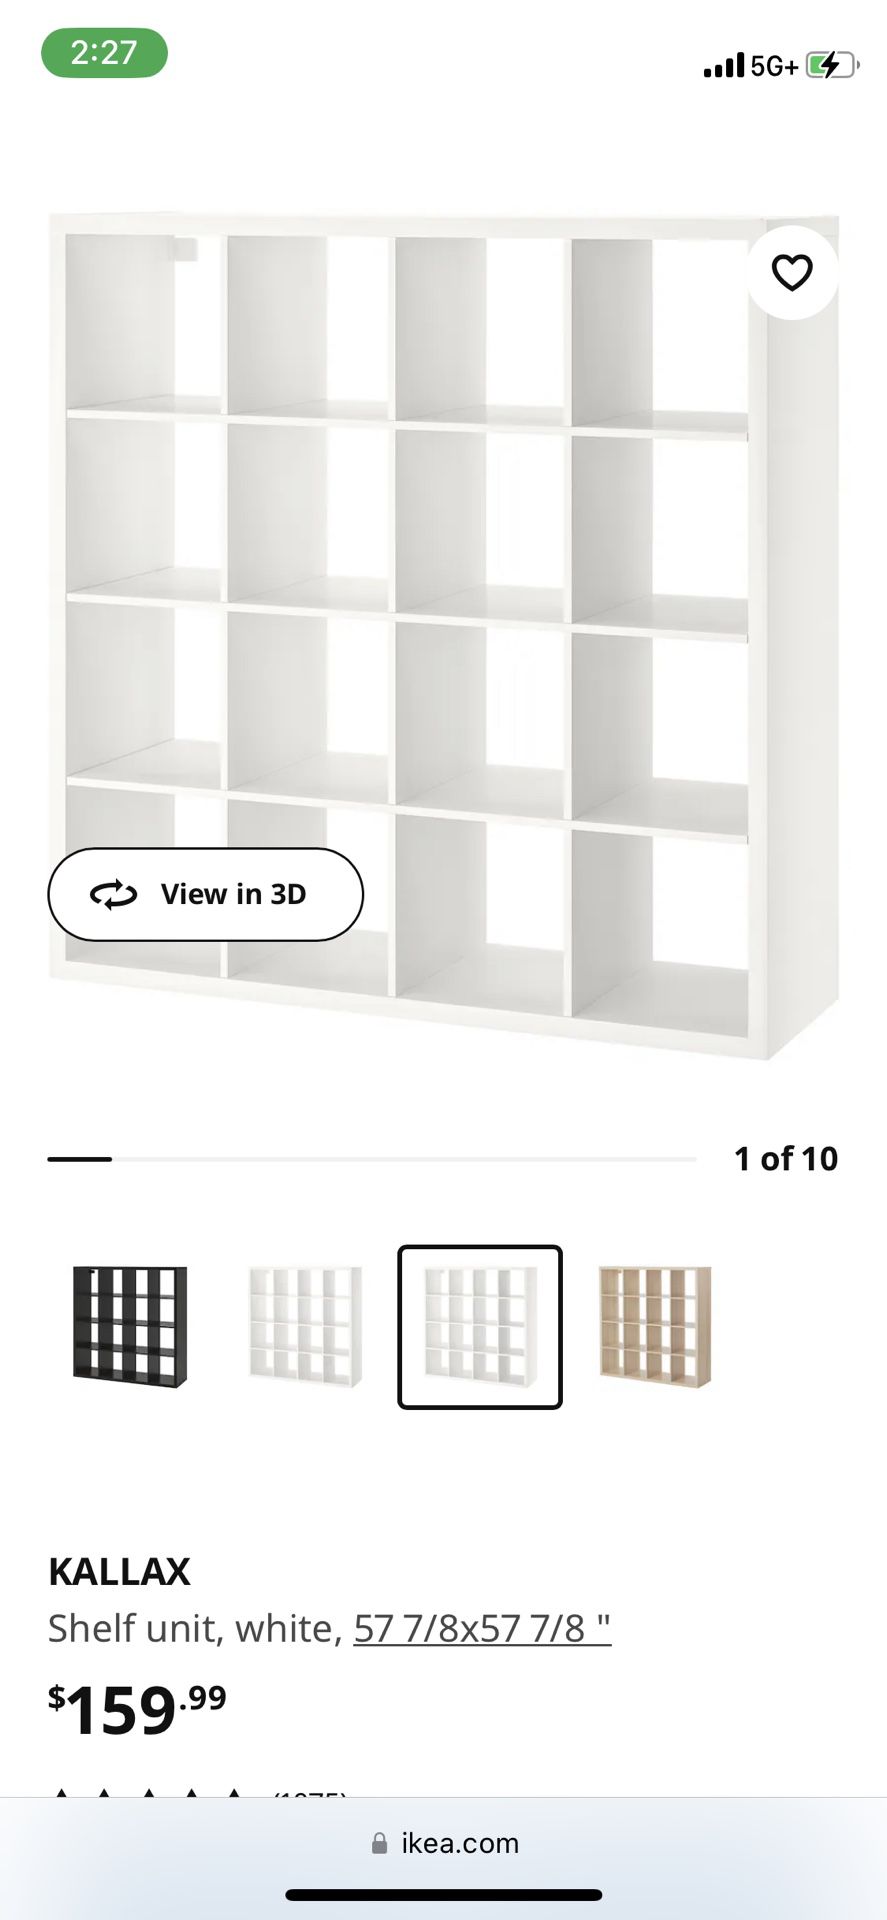 KALLAX Shelf unit, white, 57 7/8x57 7/8 - IKEA